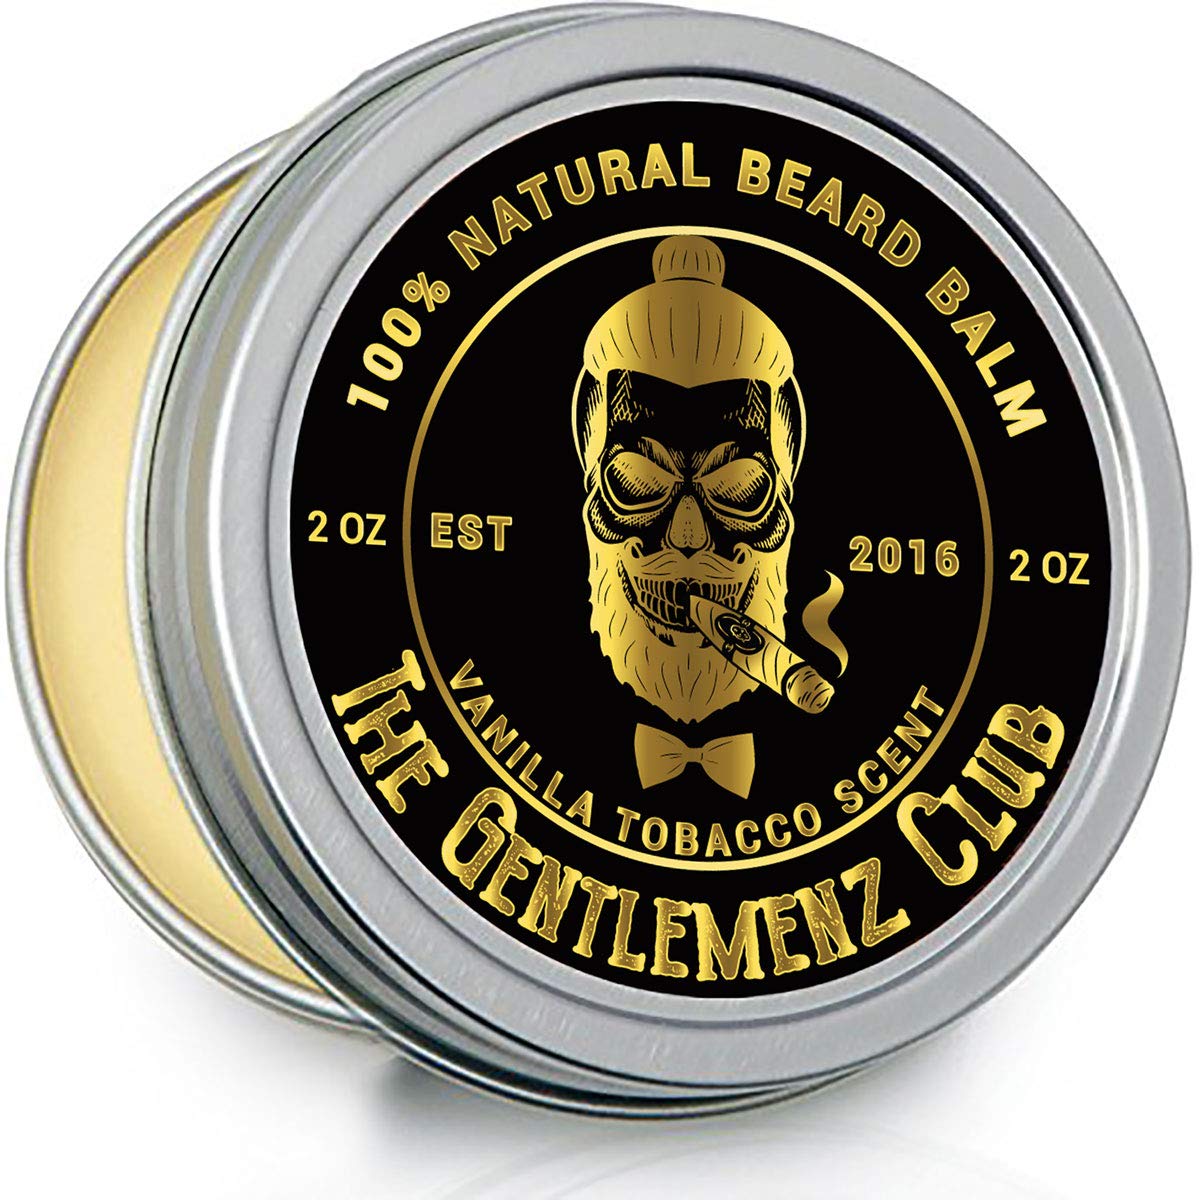 Pbbv 2 Oz Premium Beard Balm - Vanilla Tobacco Scent